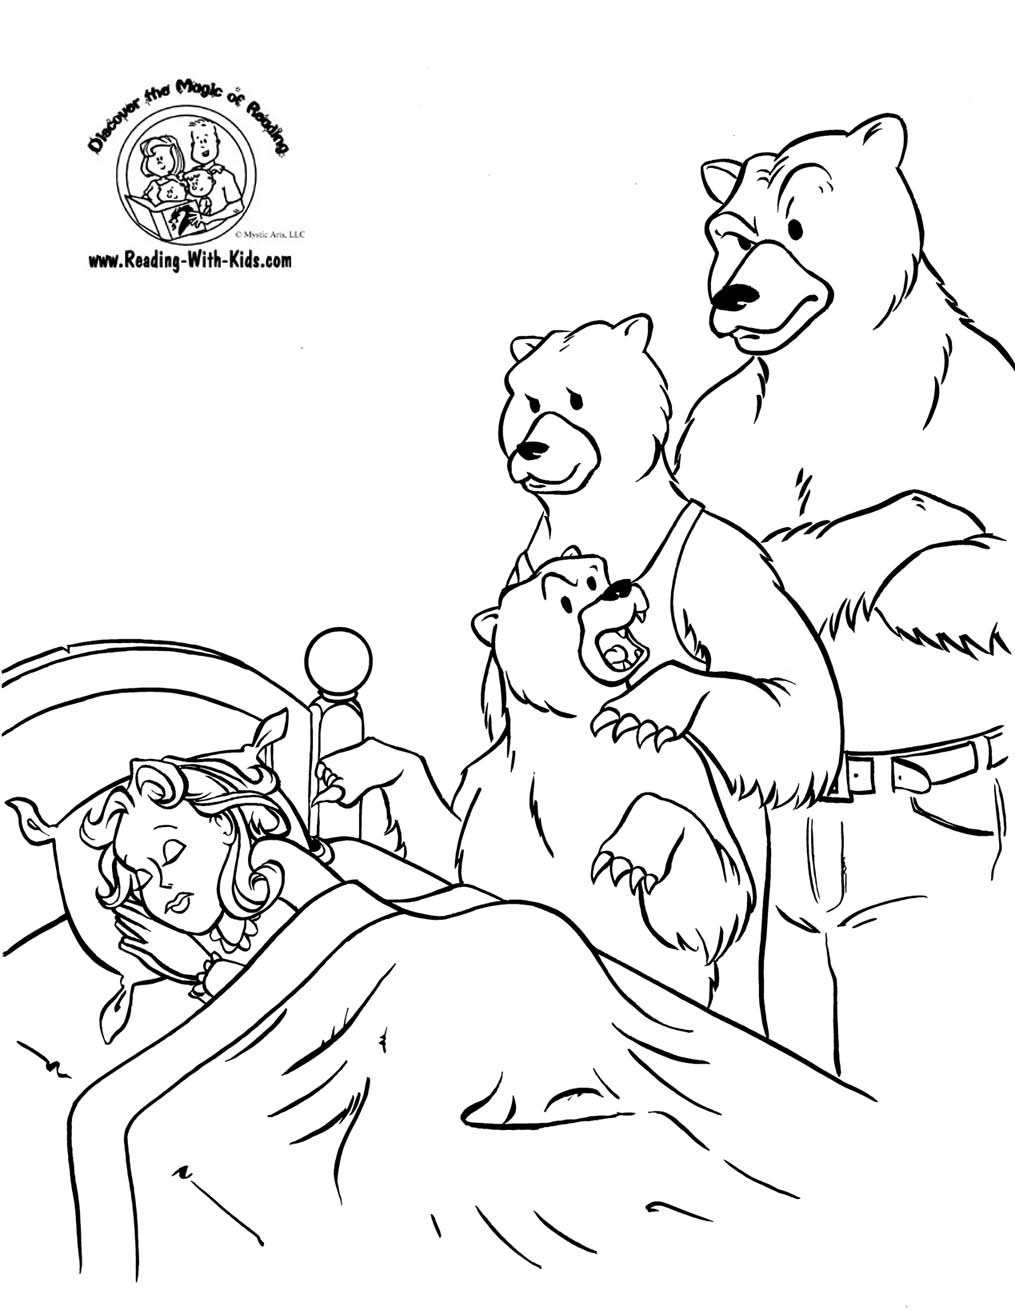 goldilocks-and-the-three-bears-coloring-page.jpg